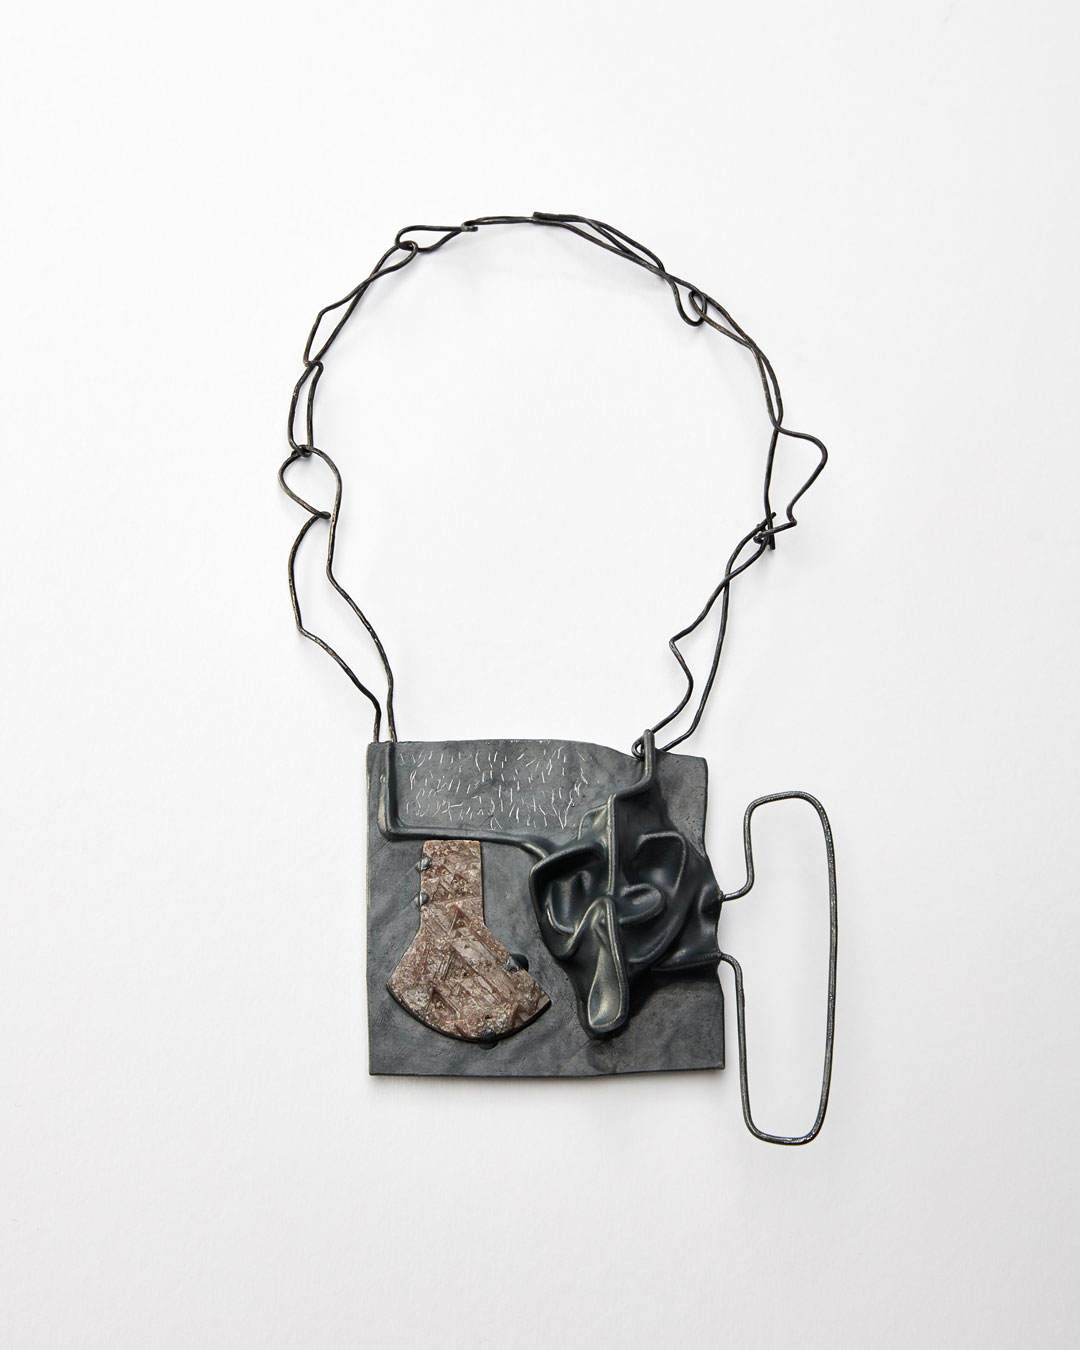 Iris Bodemer, Klang 1 (Sound 1), 2019, pendant; silver, thermoplastic, sapphire, 105 x 115 x 25 mm, €4250